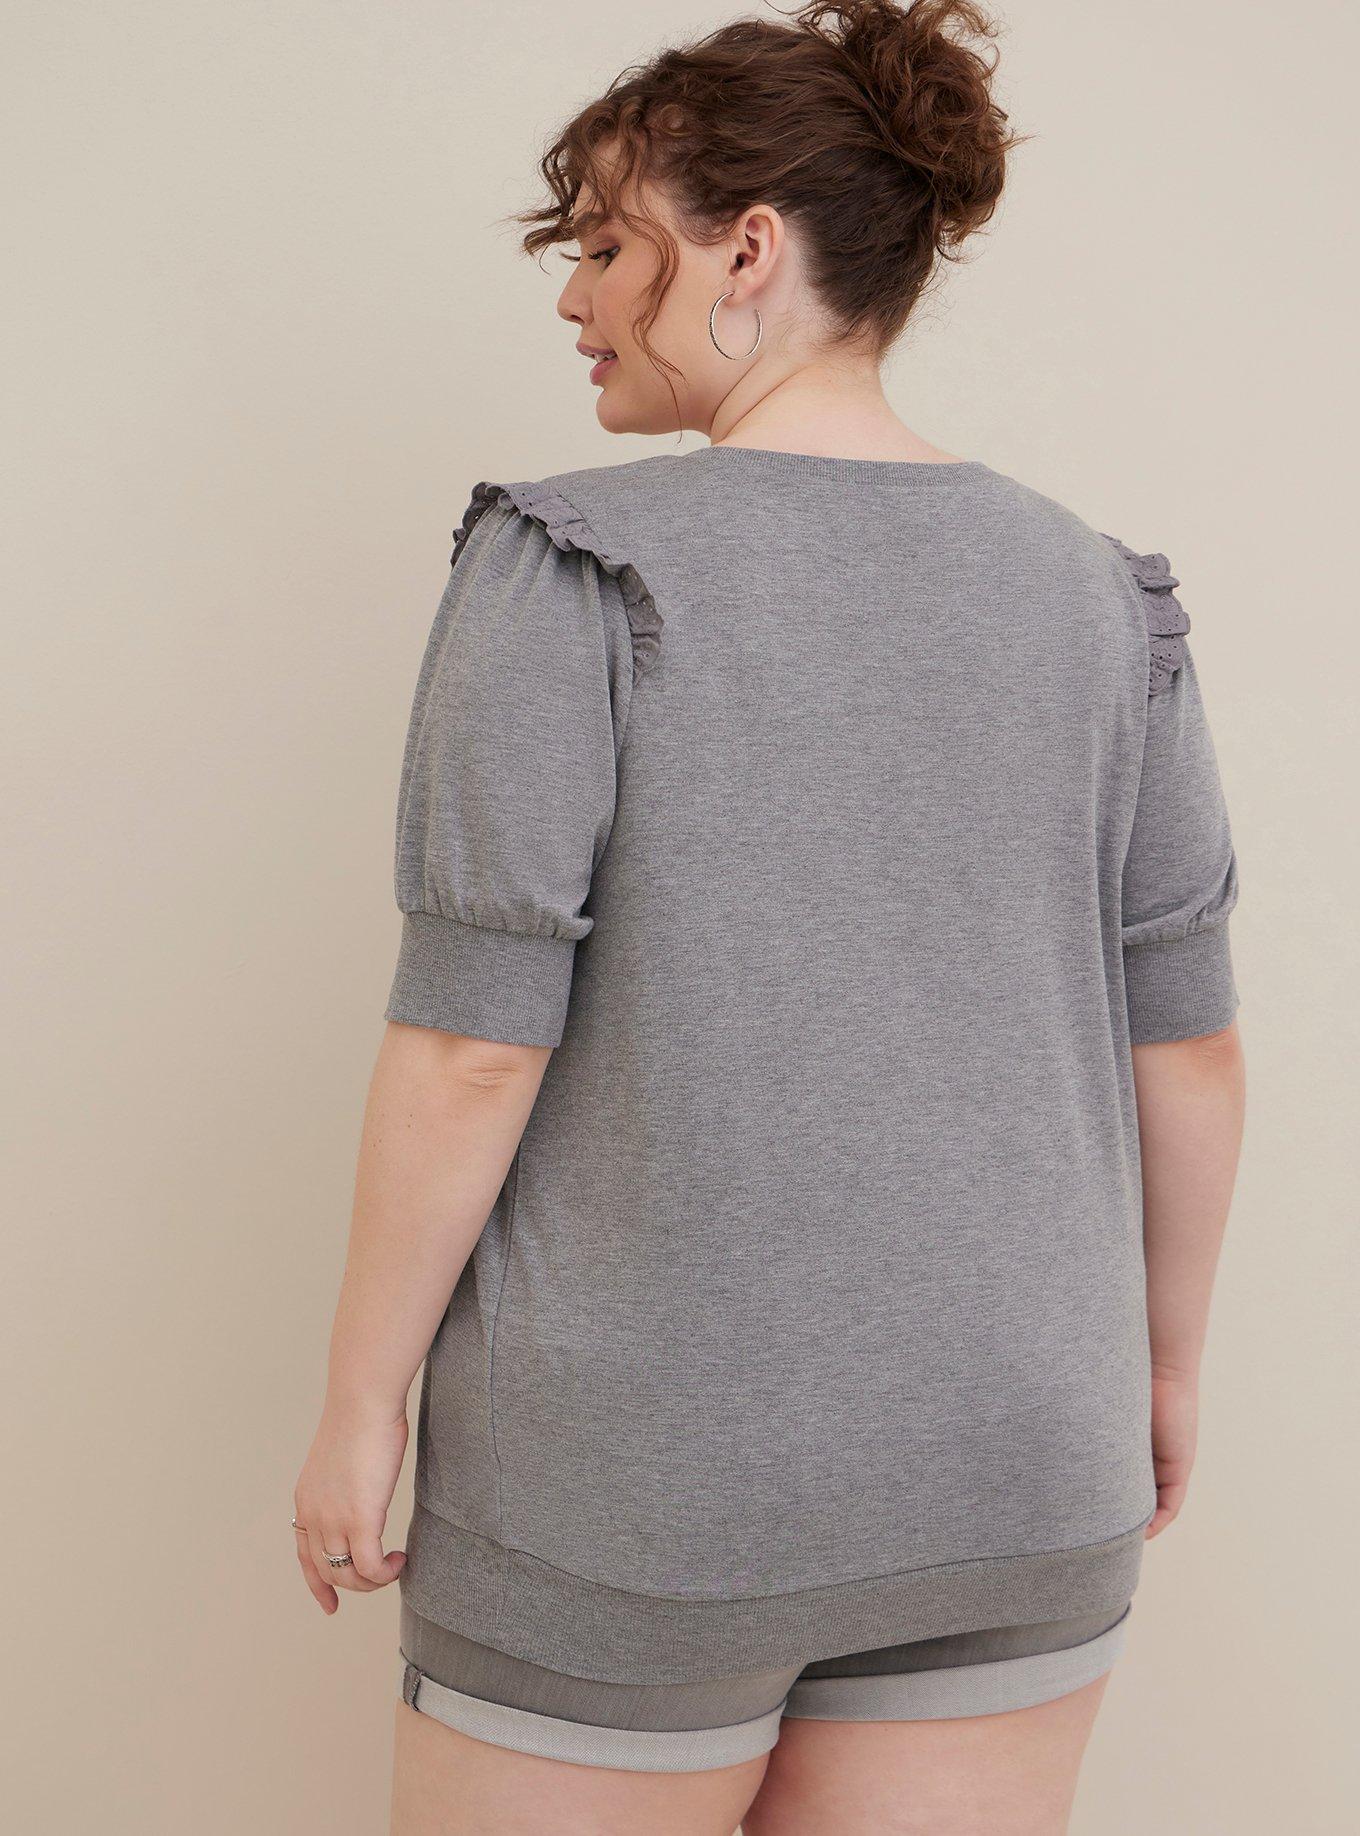 Le sweat-shirt femme – GX590